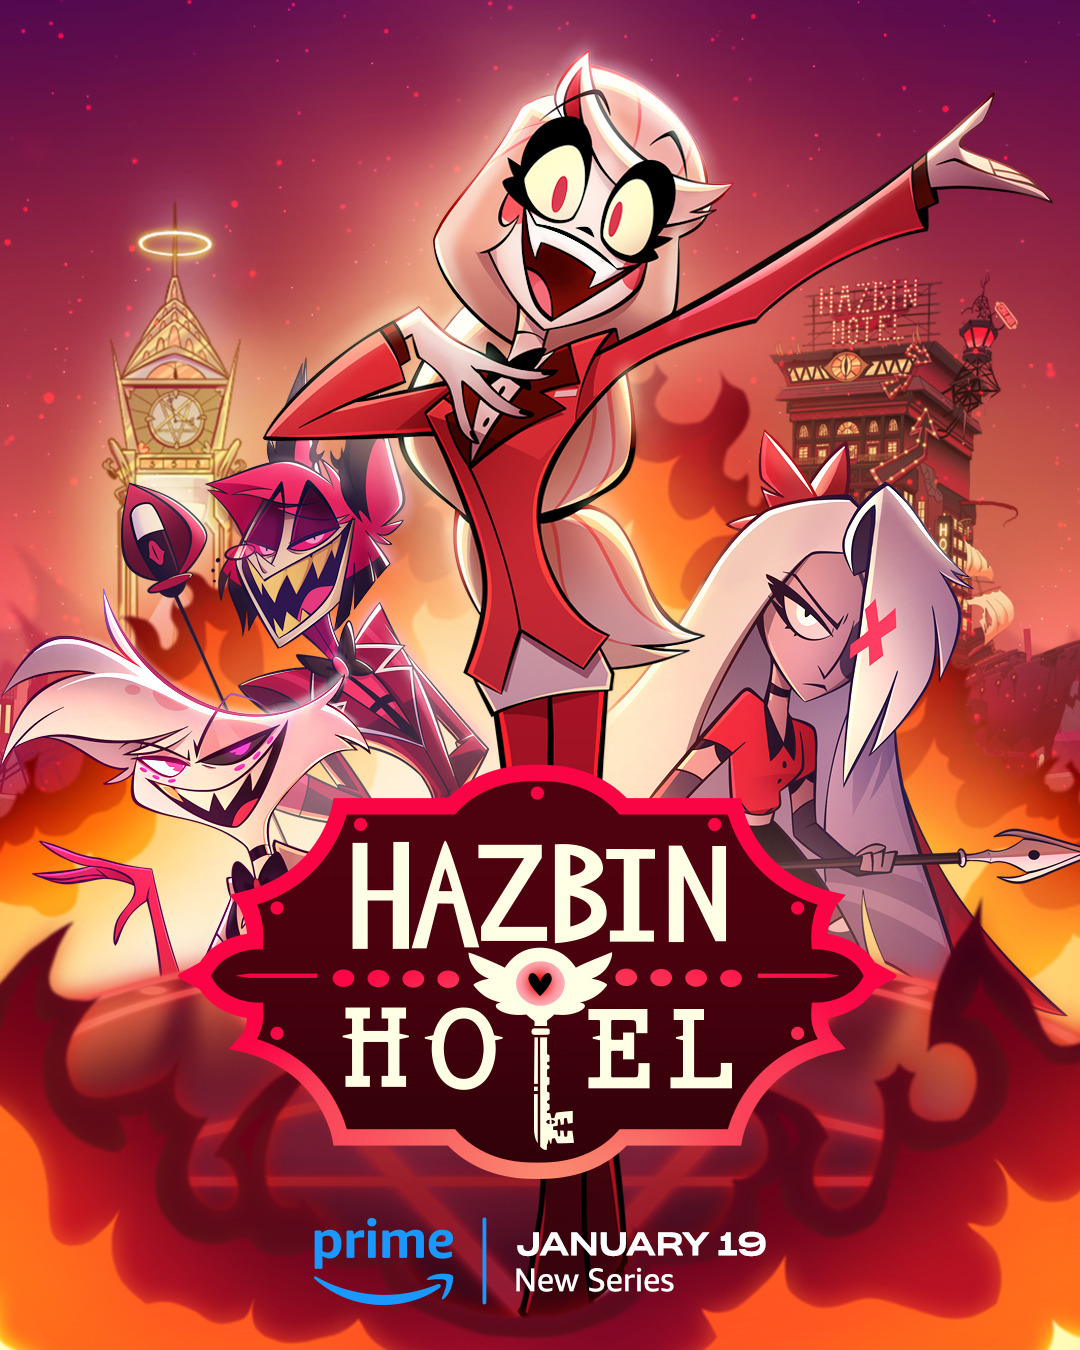 Extra Large TV Poster Image for Hazbin Hotel (#1 of 2)